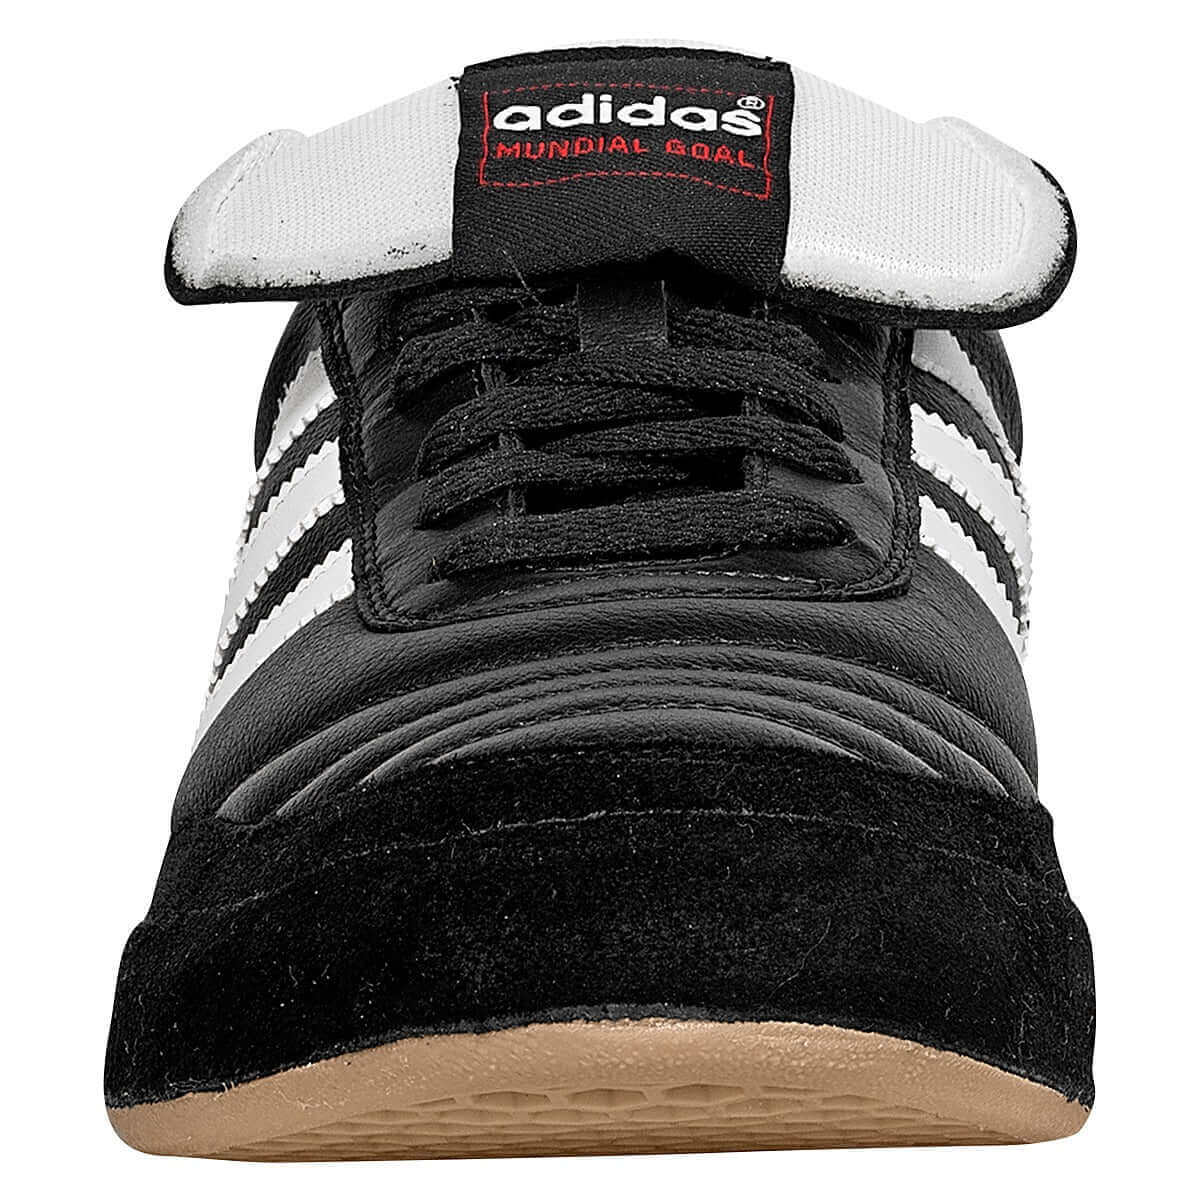 Adidas, Adidas Mundial Goal Indoor Shoes